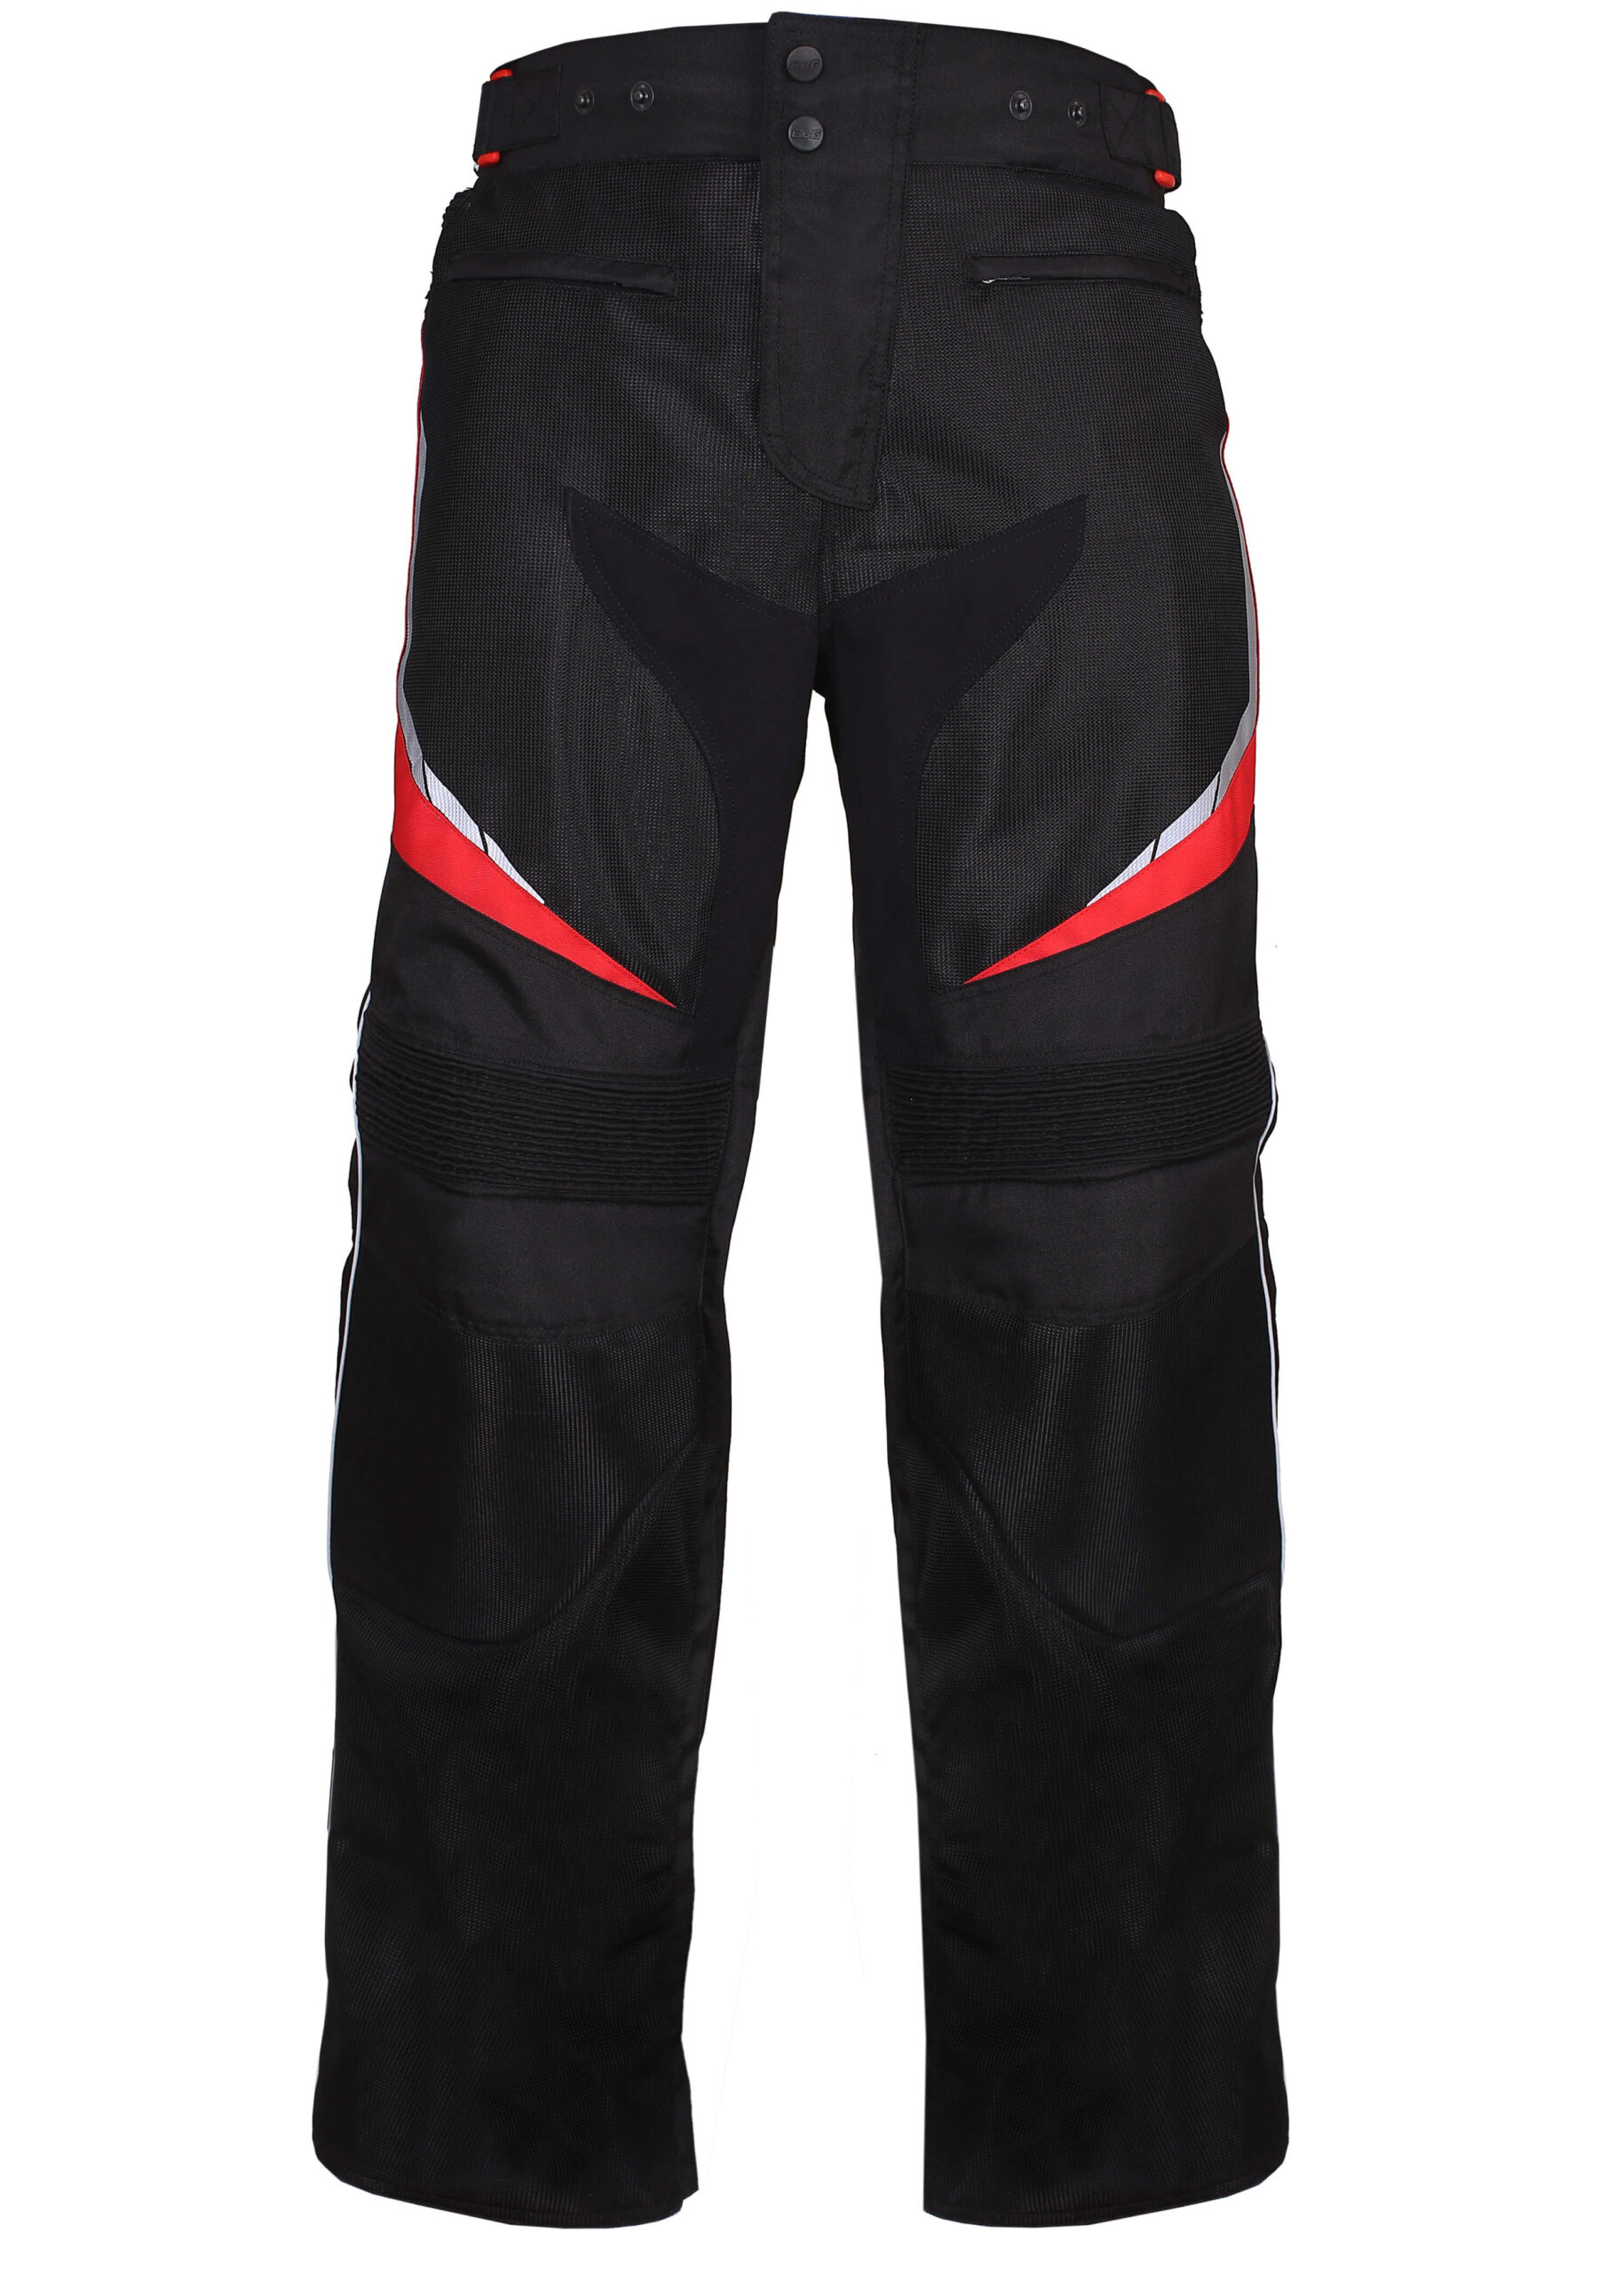 Mk Sport lower Solid Men Black Red Track Pants  Buy Mk Sport lower Solid  Men Black Red Track Pants Online at Best Prices in India  Flipkartcom